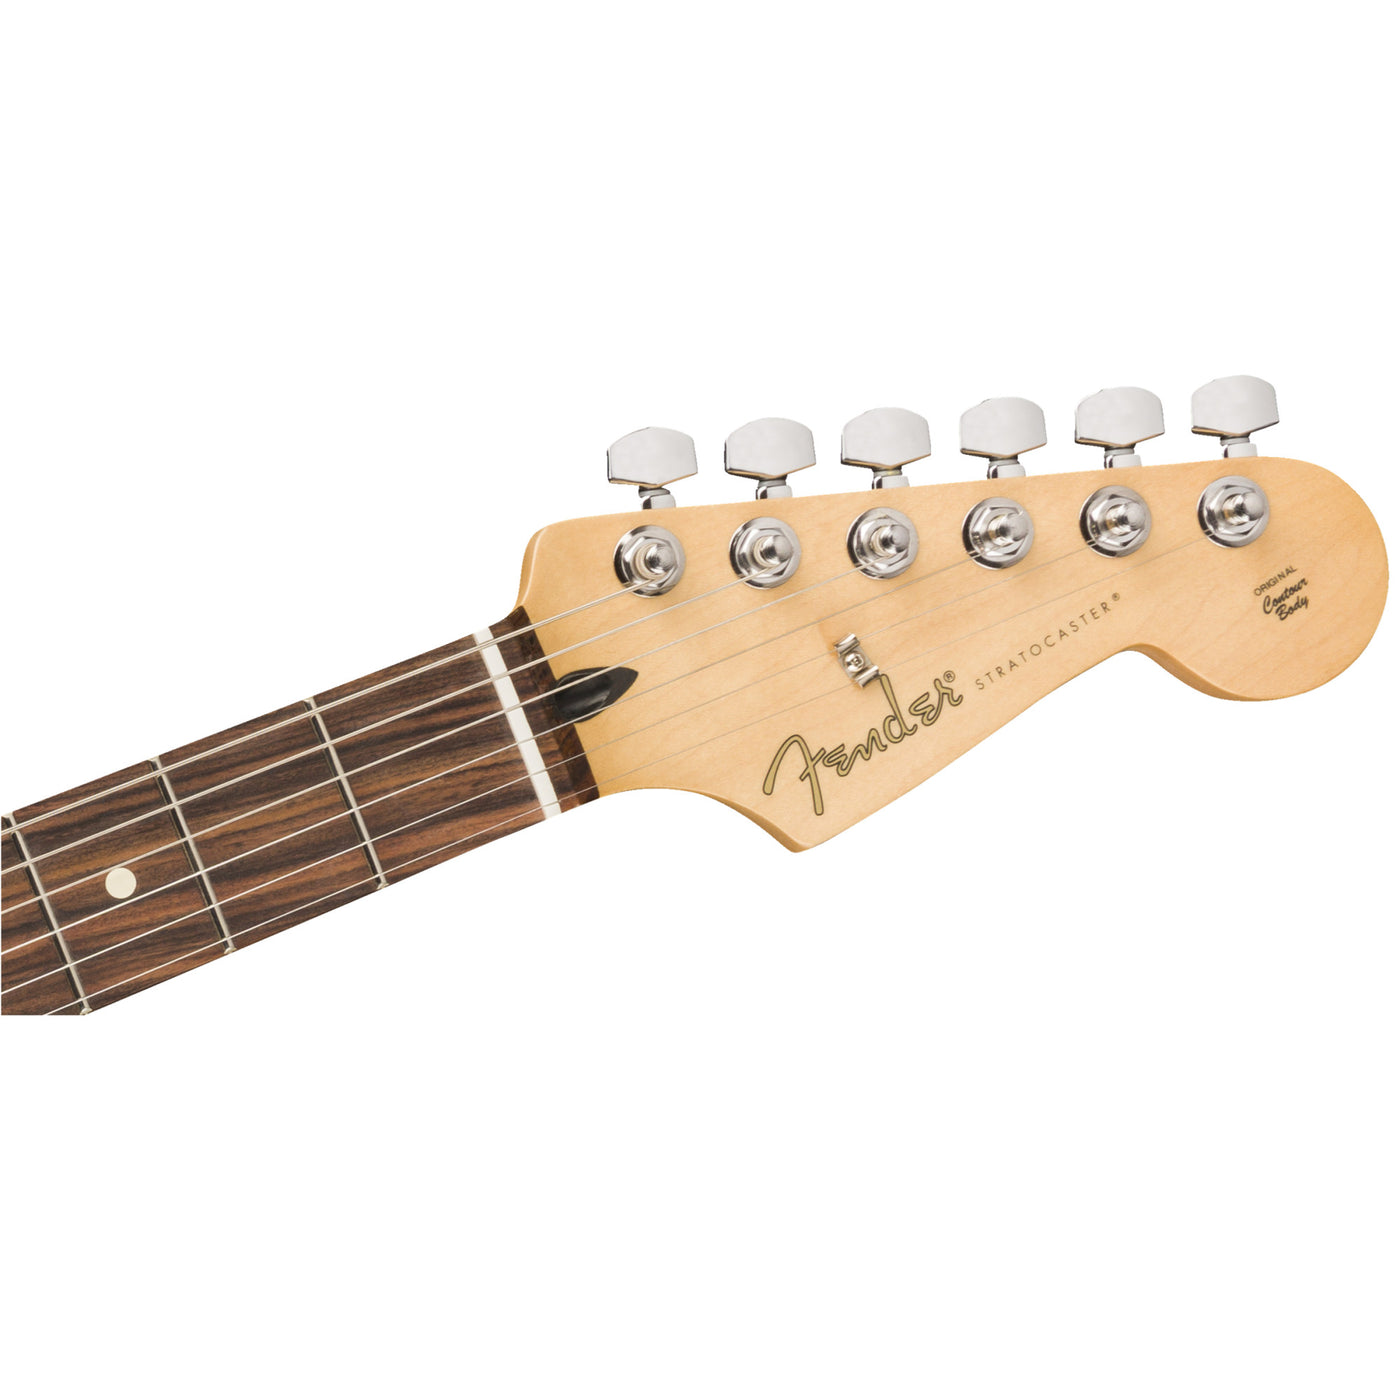 Fender Stratocaster HSS Capri Orange with Pau Ferro (0144523582)